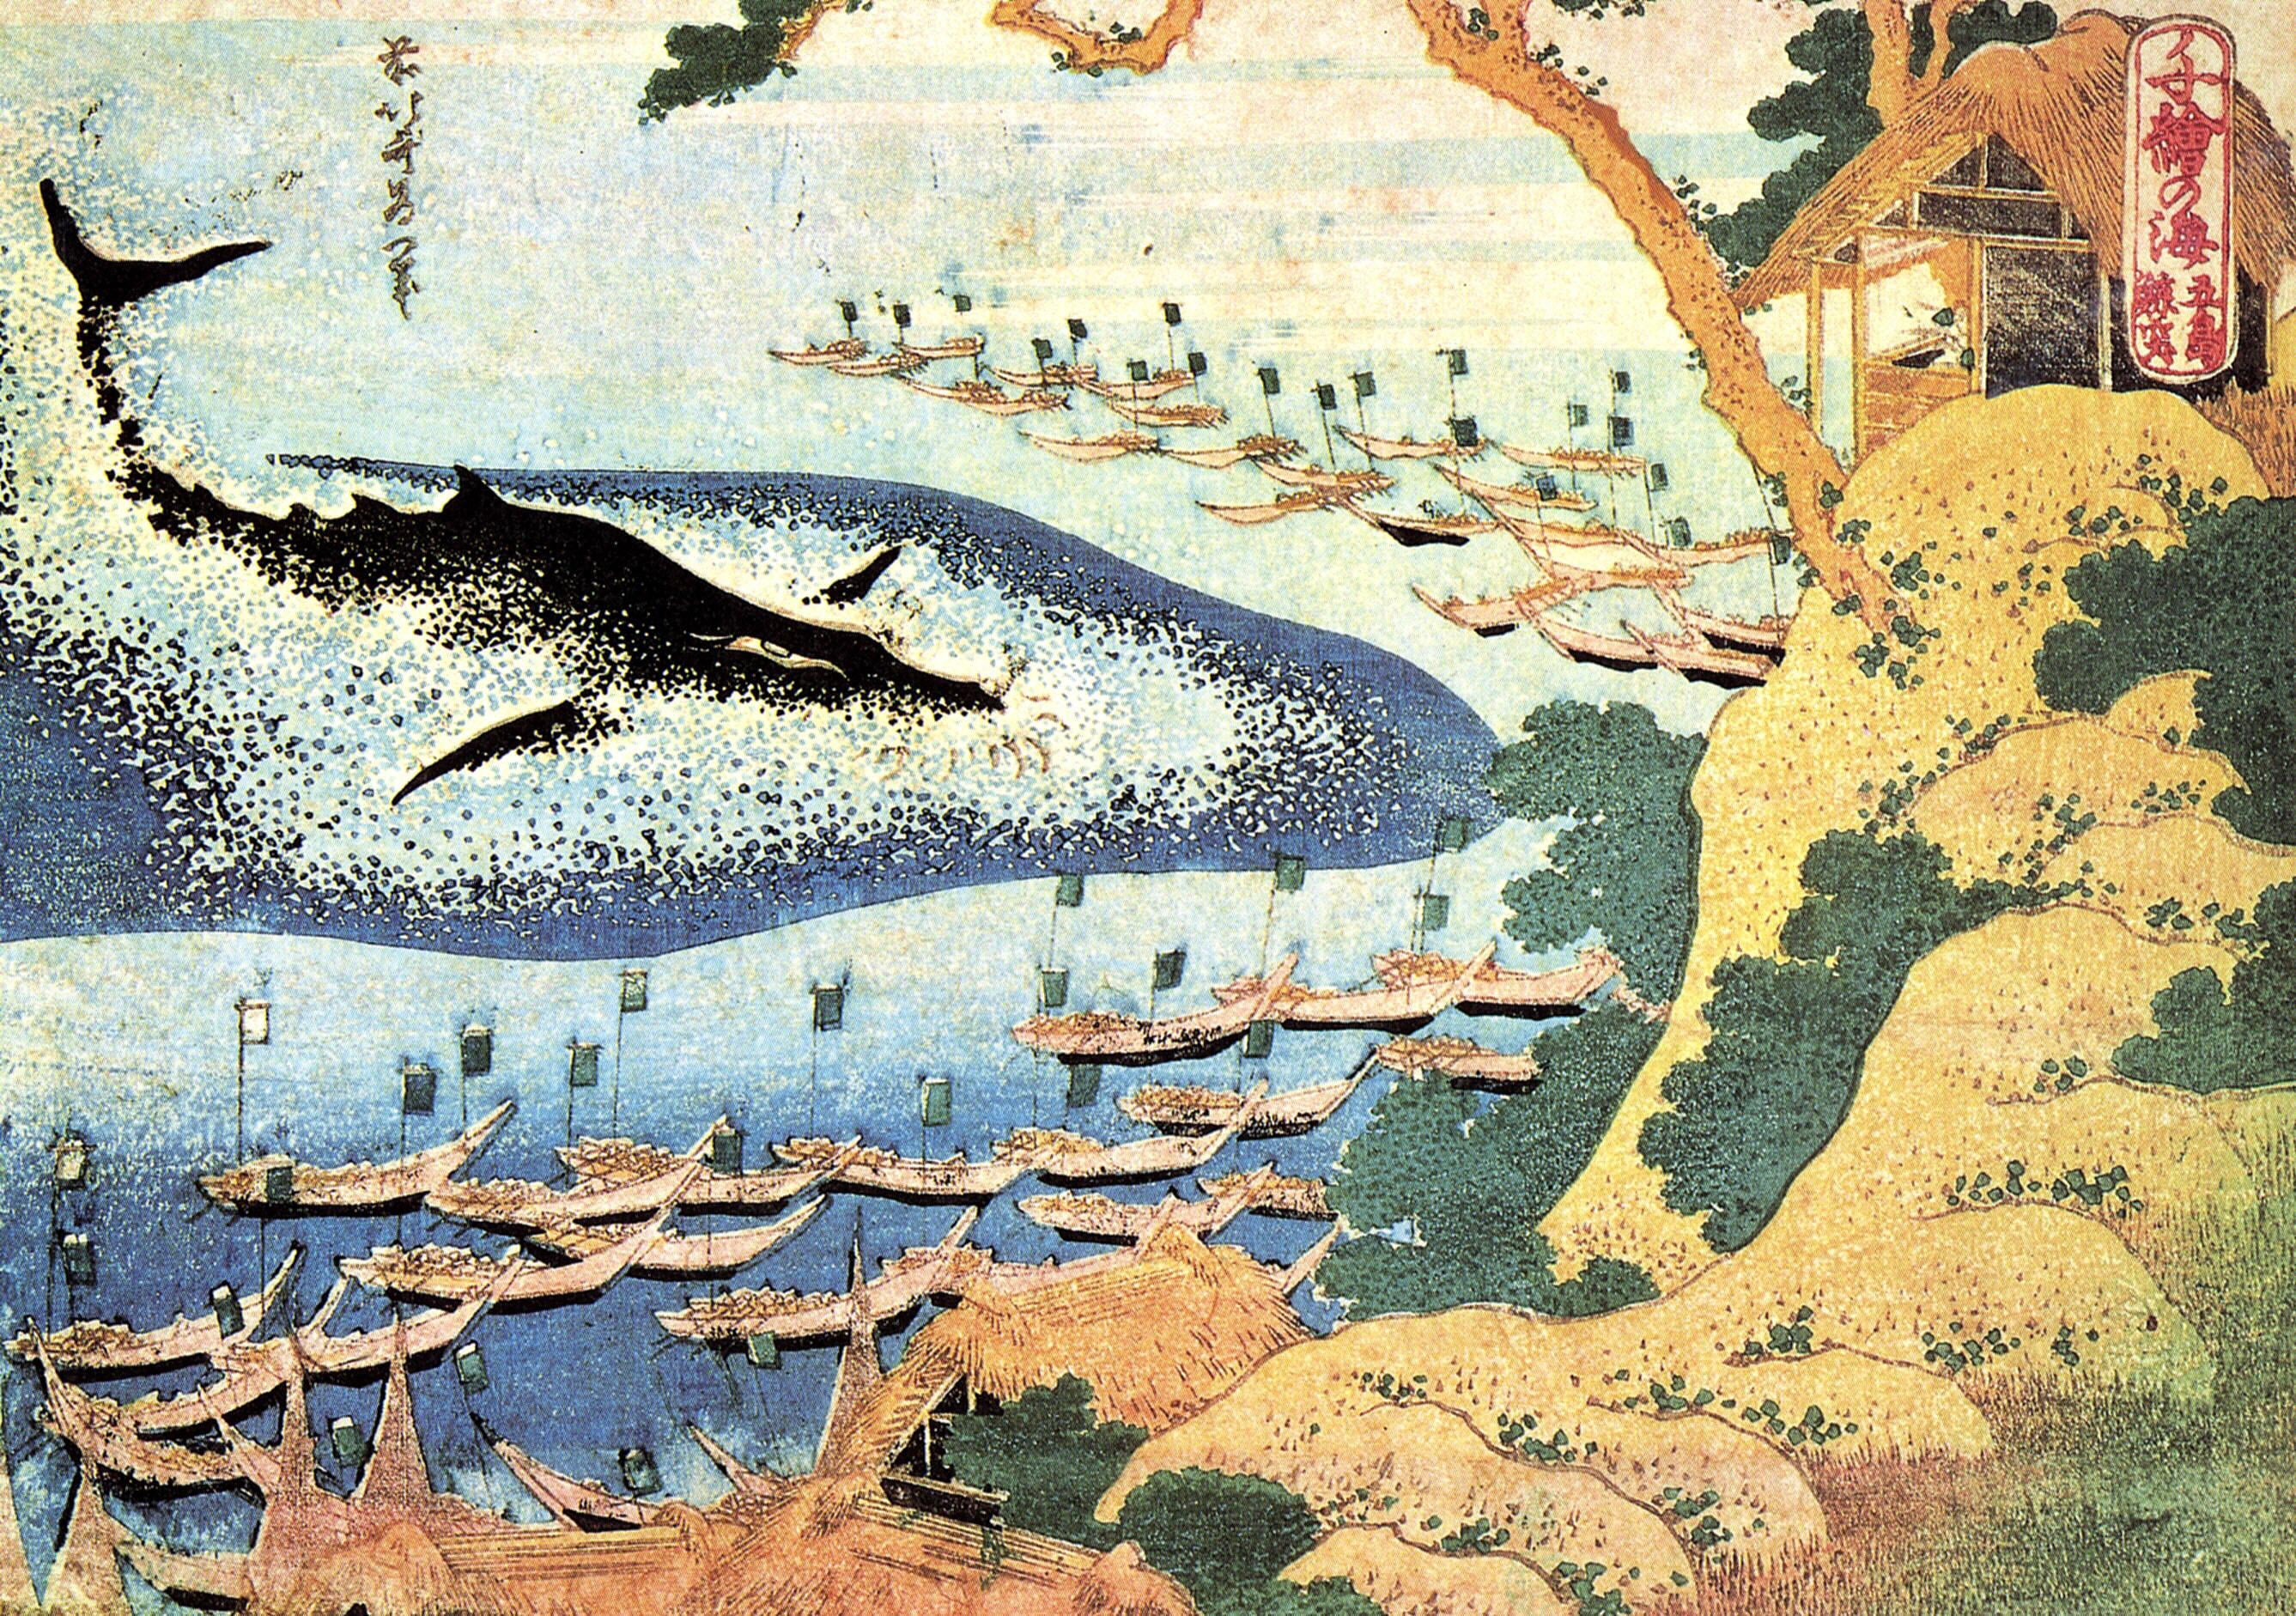 group of gondola near shark artwork, Hokusai, Japan, ink, whale